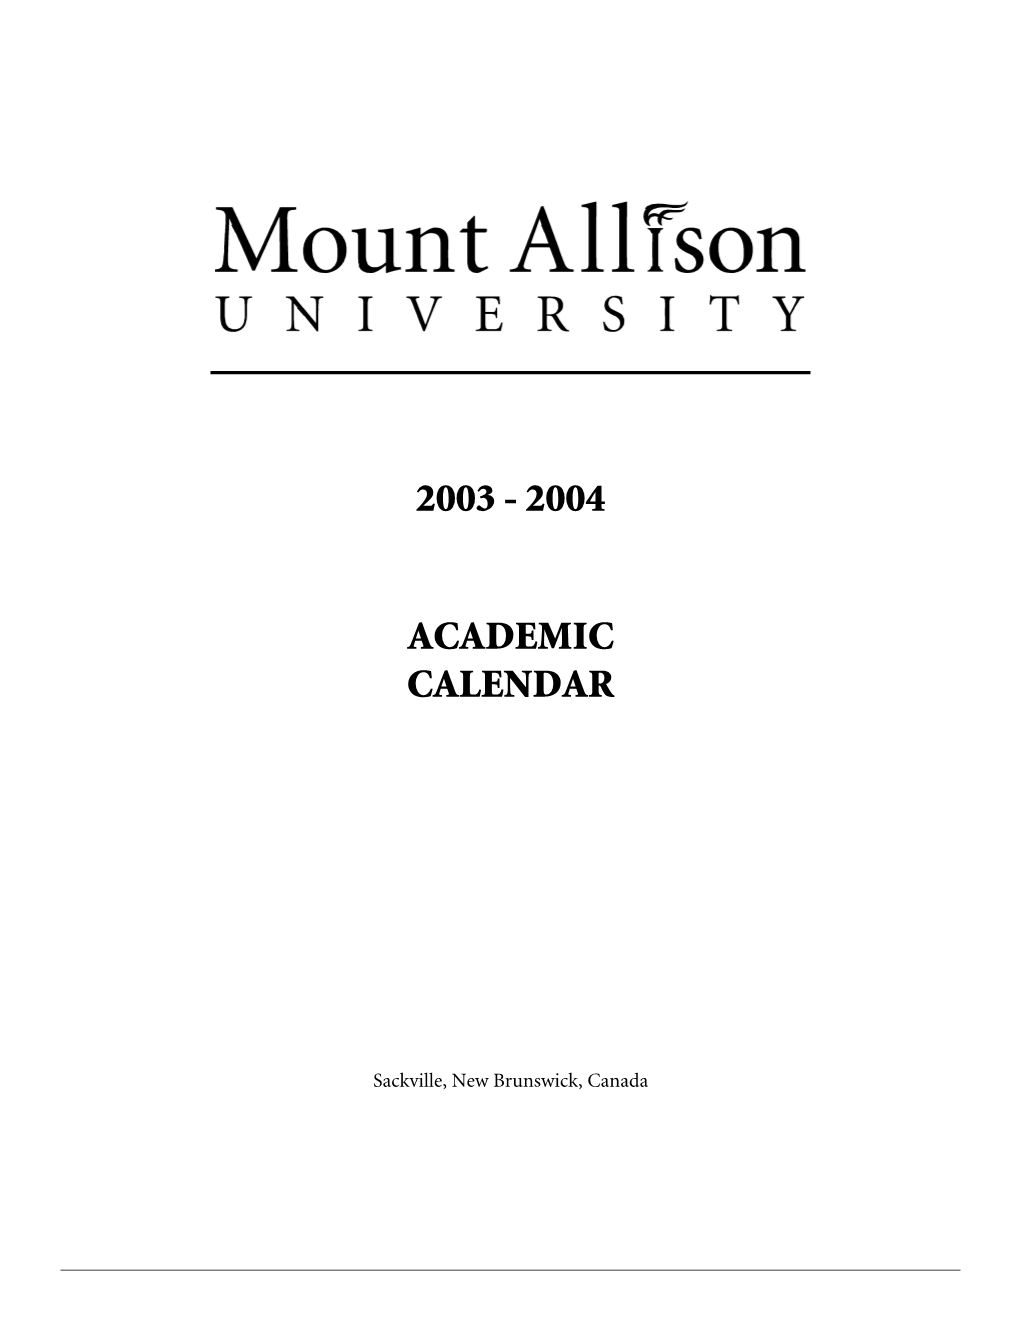 Academic Calendar 2003-2004 Mount Allison University